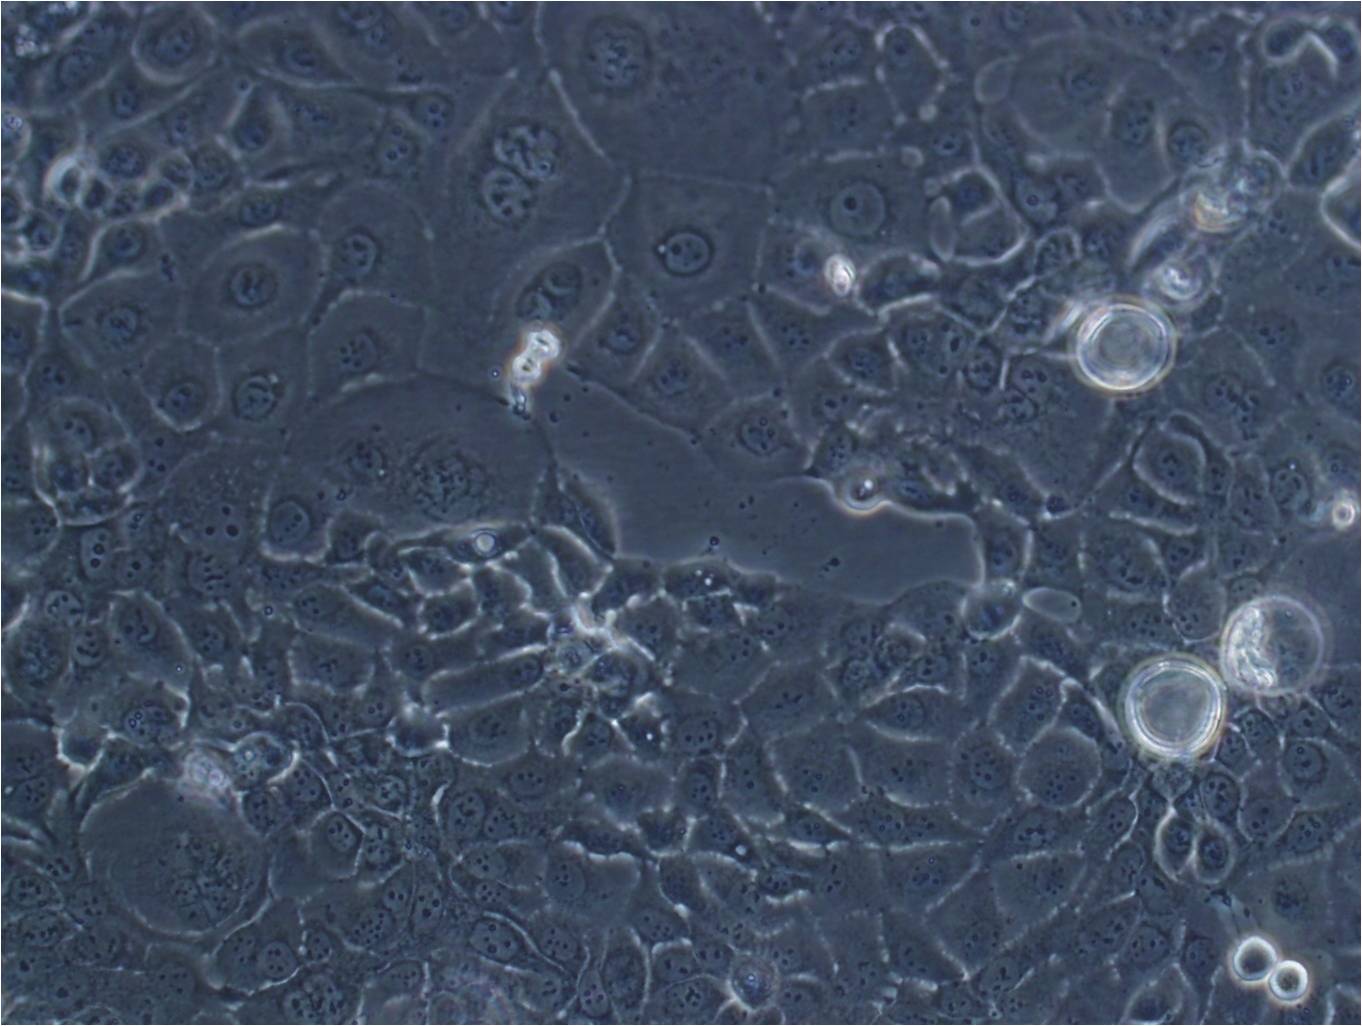 MDA-MB-415 epithelioid cells人乳腺腺癌细胞系,MDA-MB-415 epithelioid cells